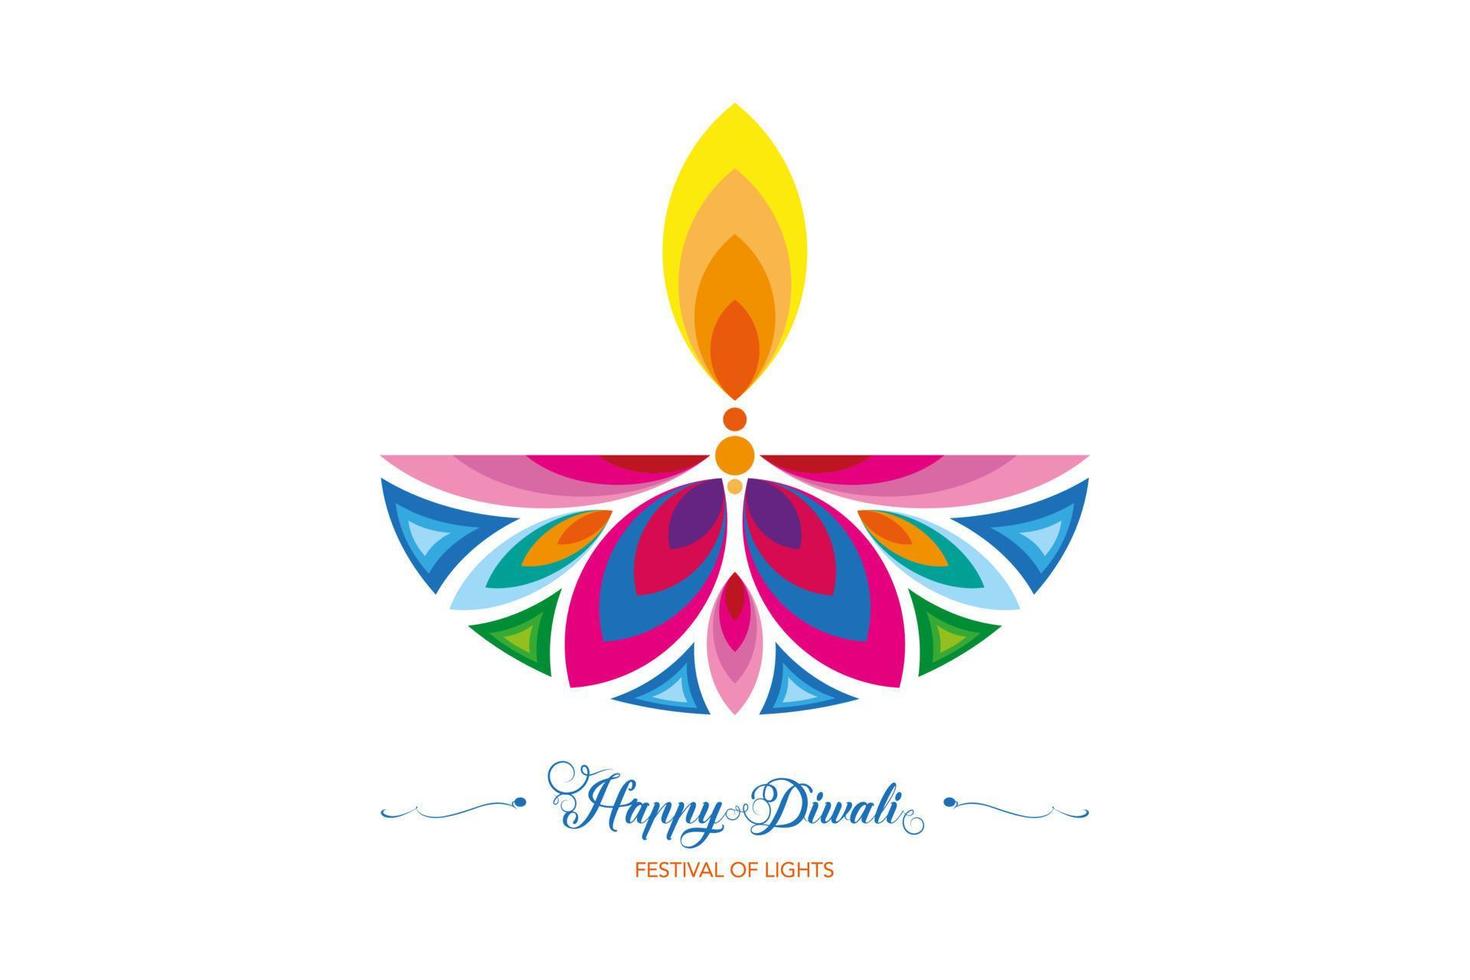 feliz diwali festival de luces india celebración colorida plantilla de logotipo. diseño gráfico de pancartas de lámpara de aceite diya de flores indias, diseño moderno en colores vibrantes. vector aislado sobre fondo blanco